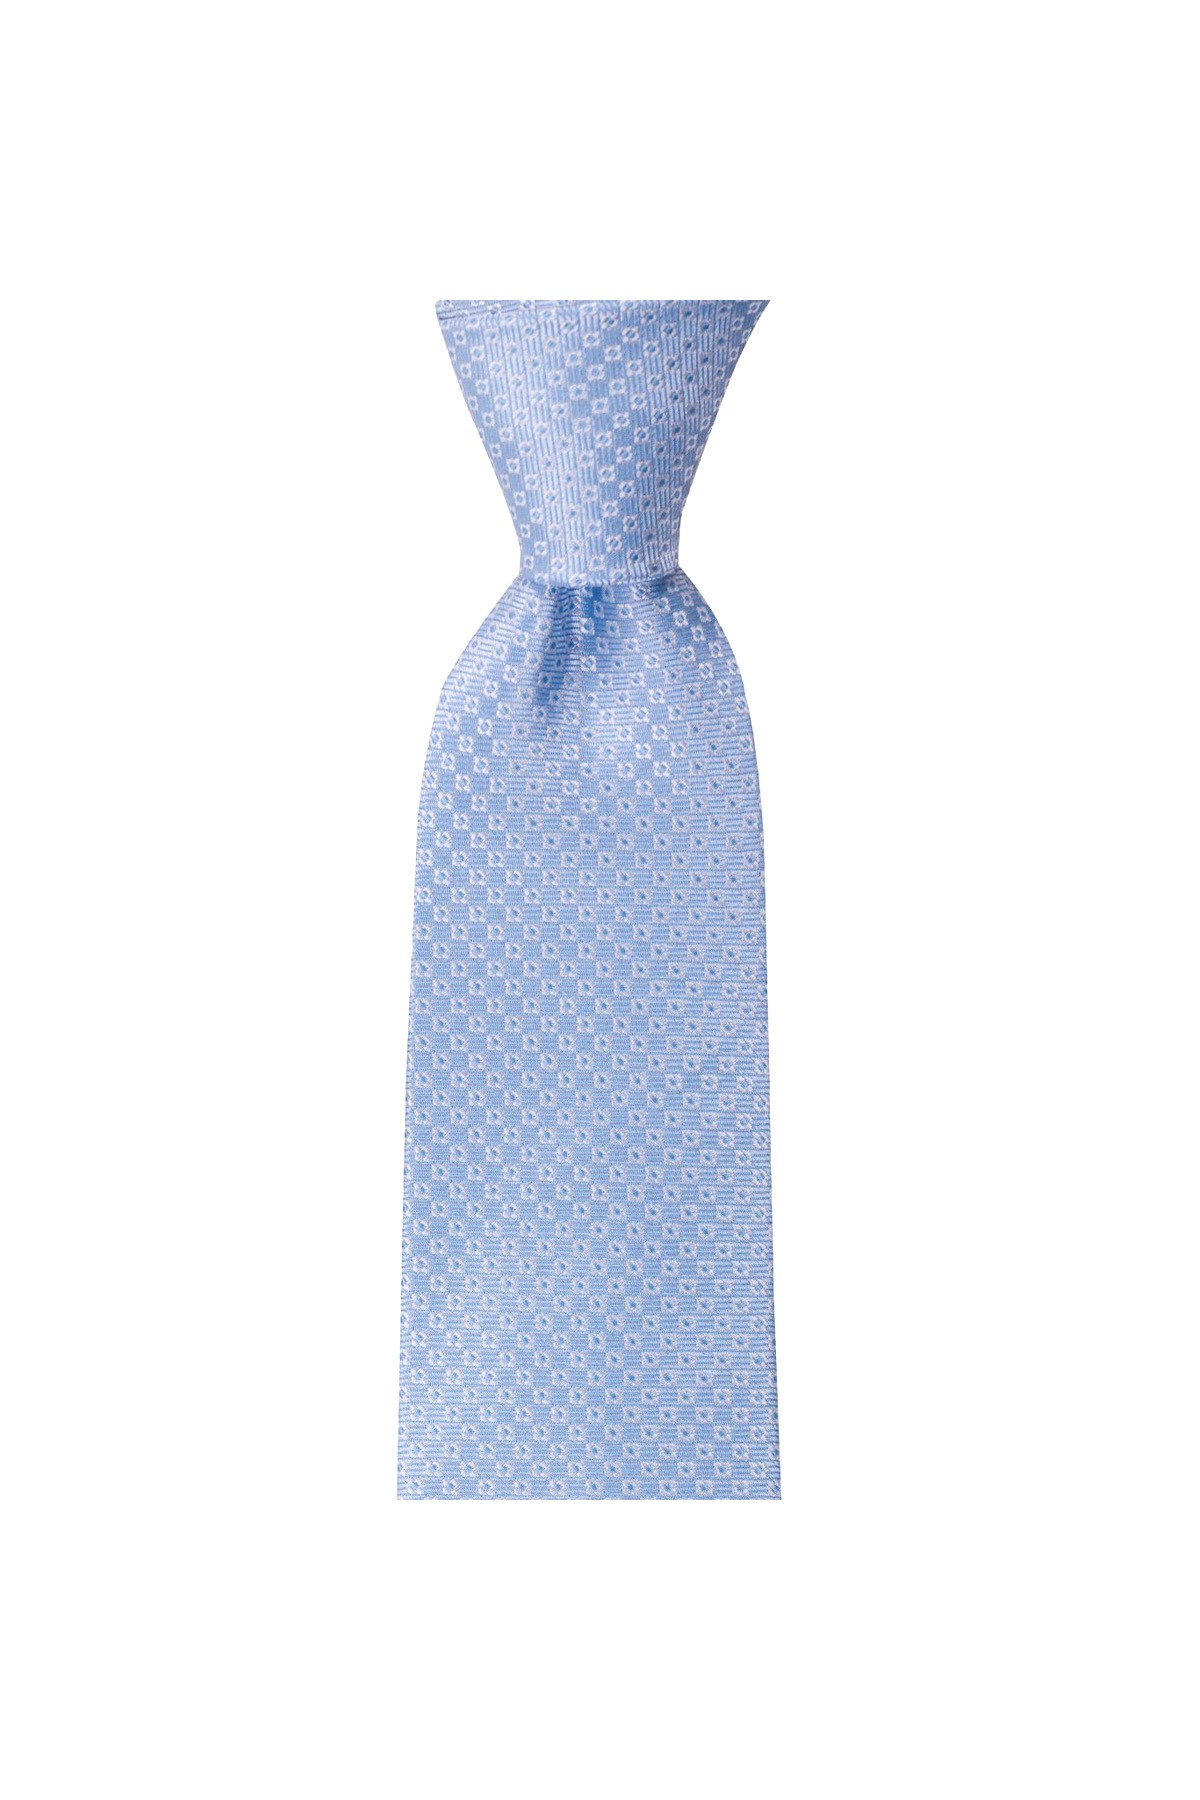 Düz renkli 8 cm genişliğinde mendilli kravat - Açık mavi